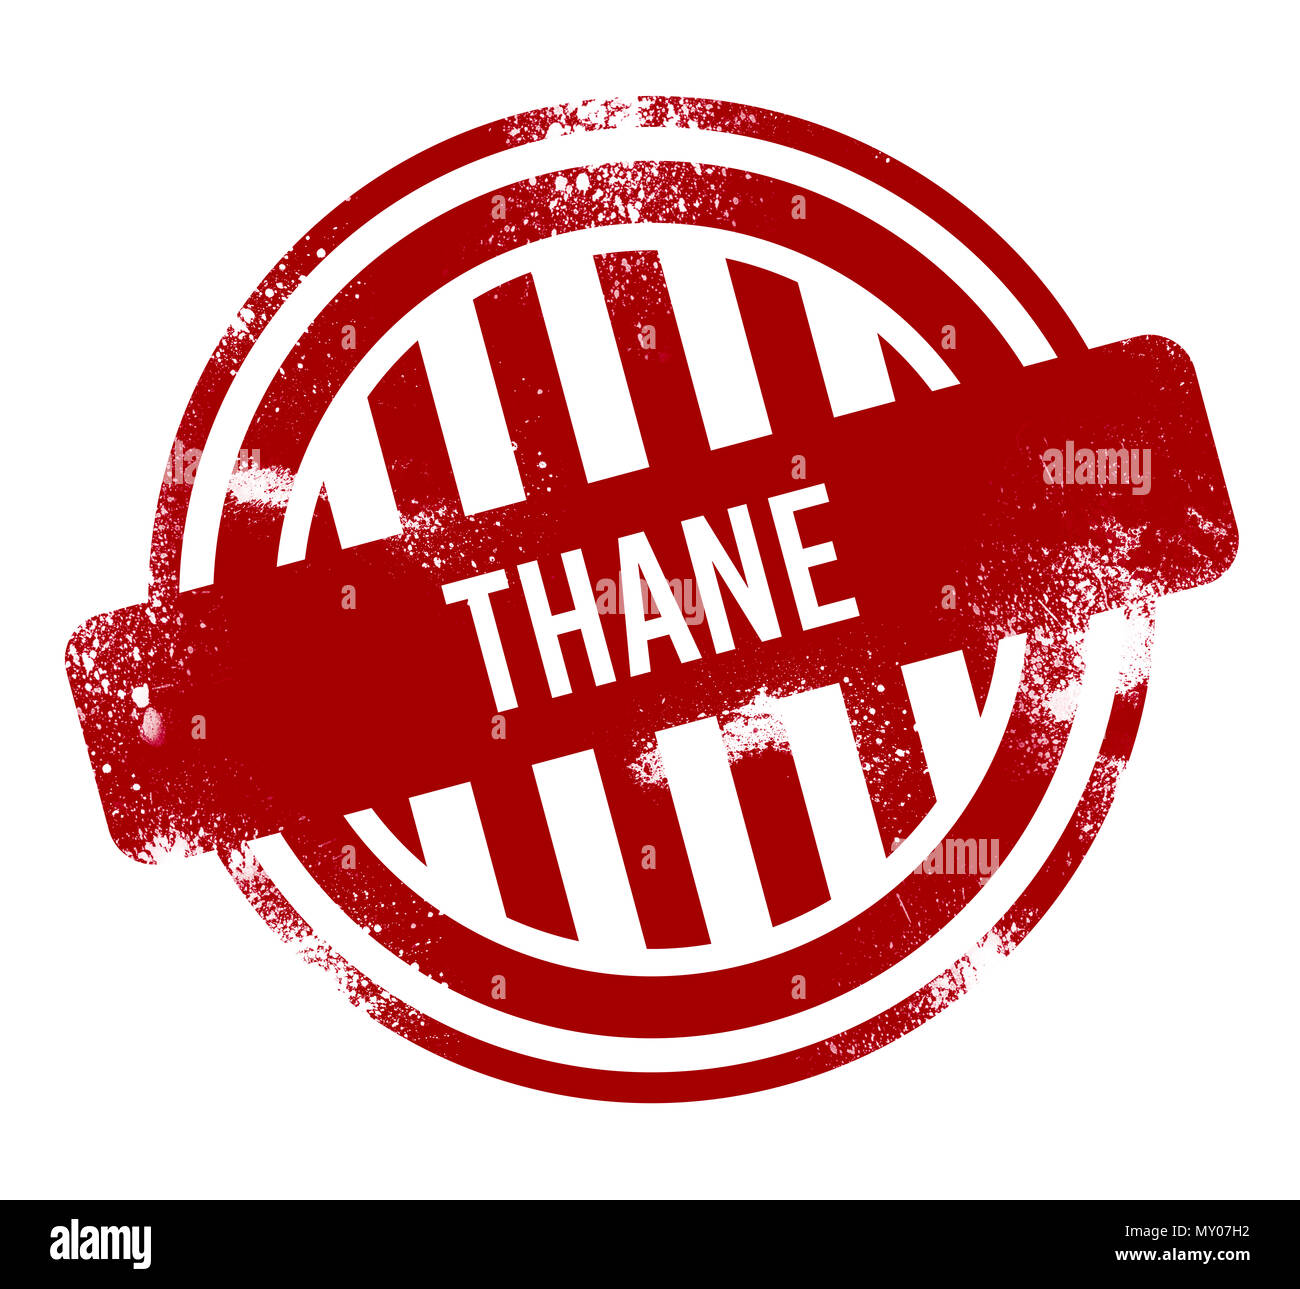 Thane - Red grunge button, stamp Stock Photo